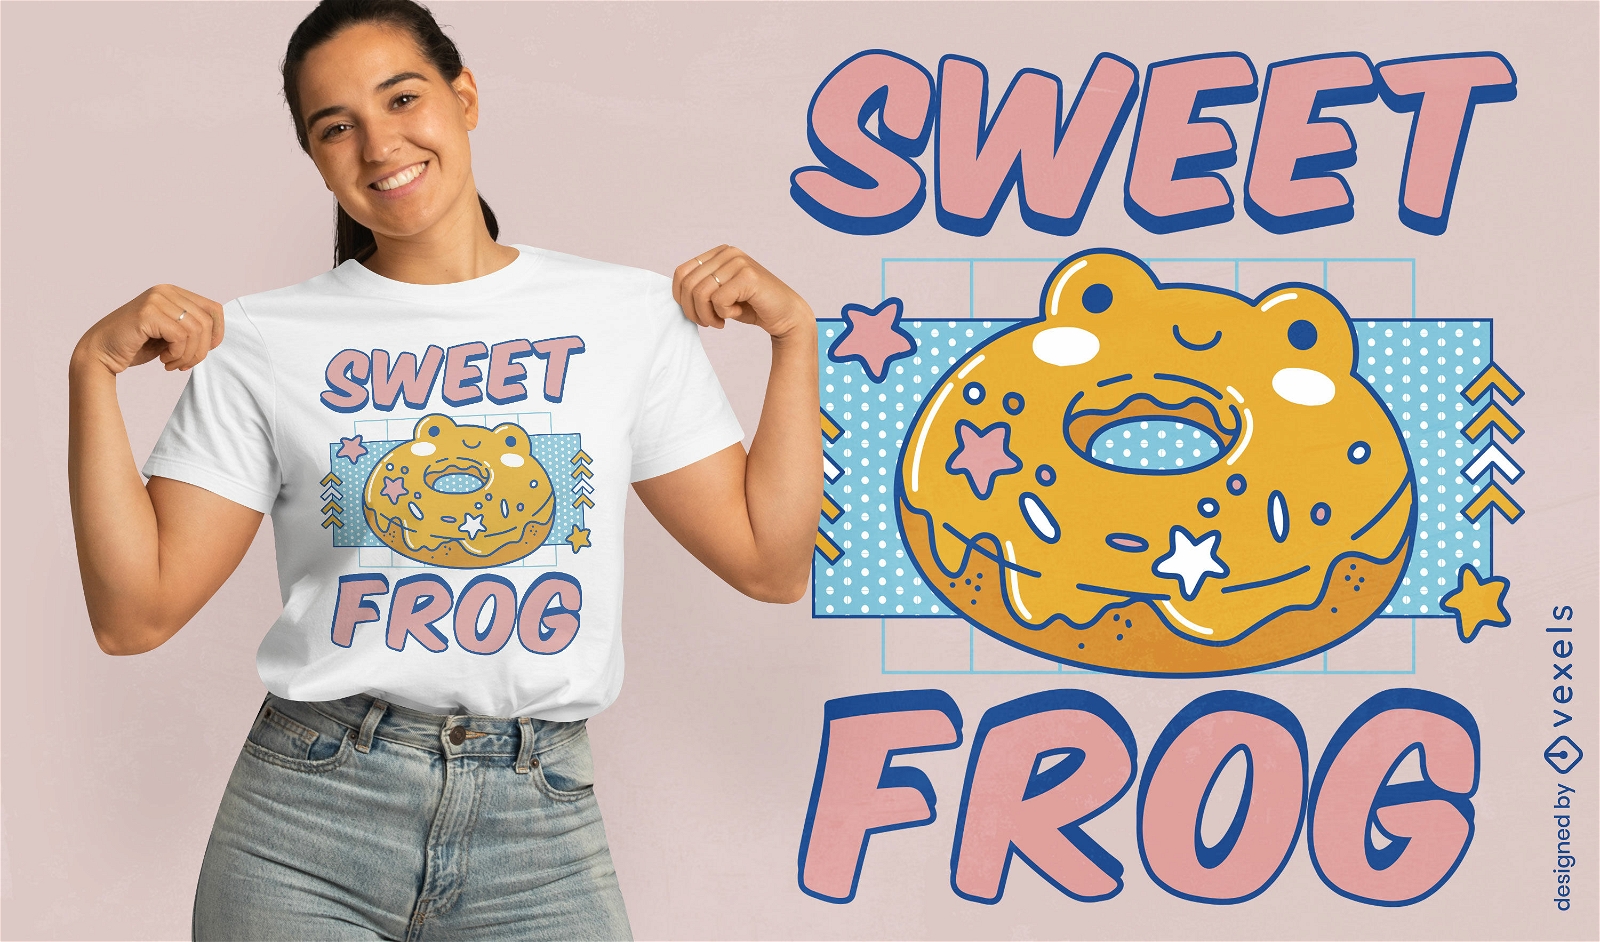 Sweet donut frog t-shirt design